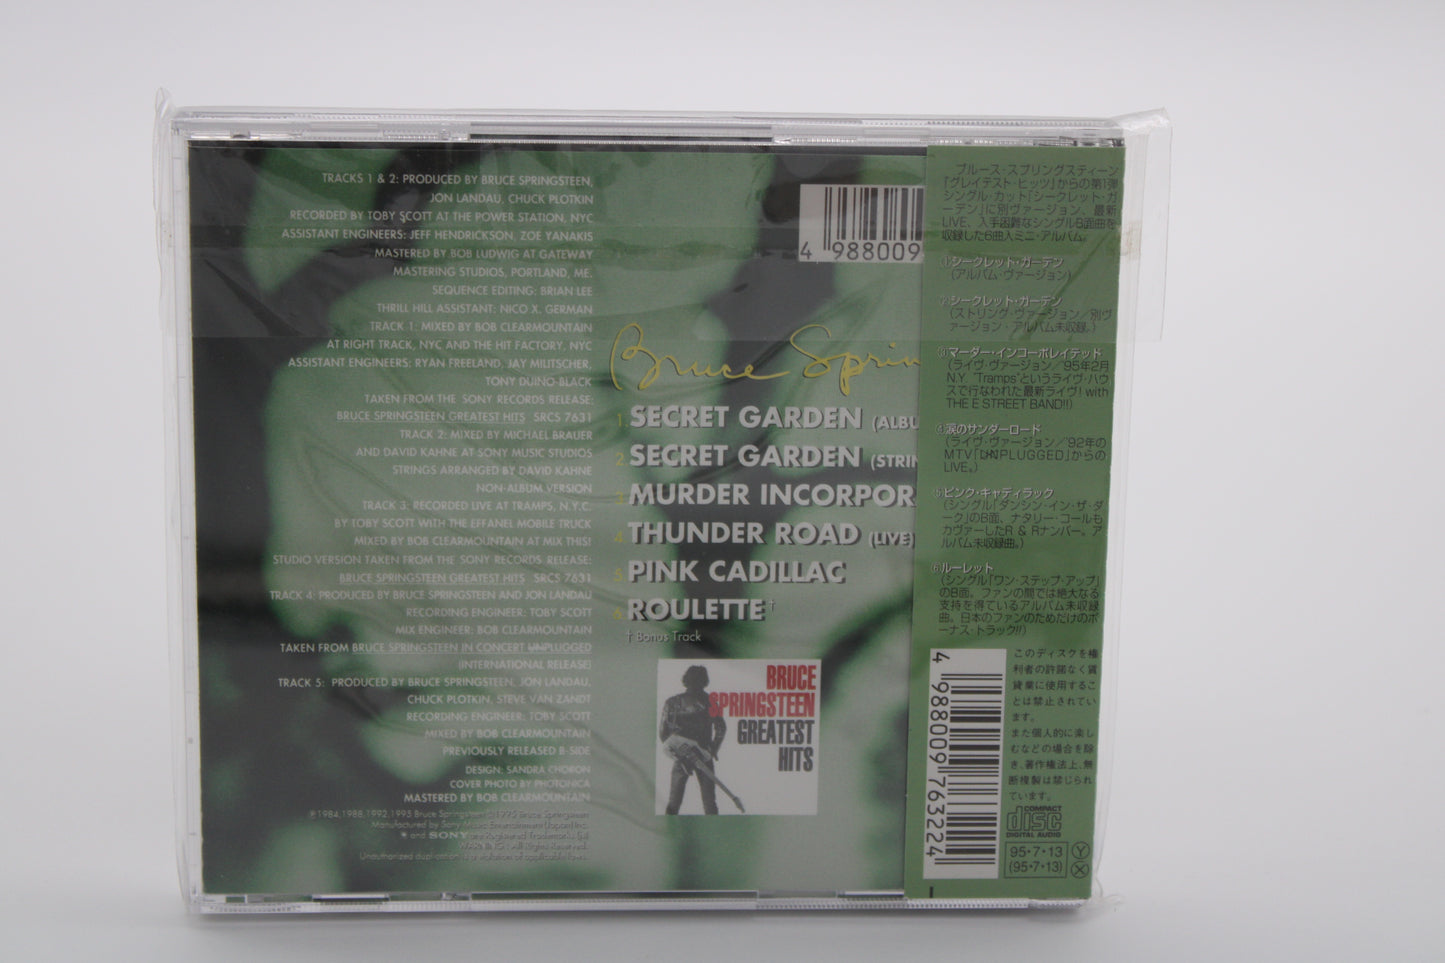 Secret Garden CD/Single - Japan Release on Sony - Sealed with OBI